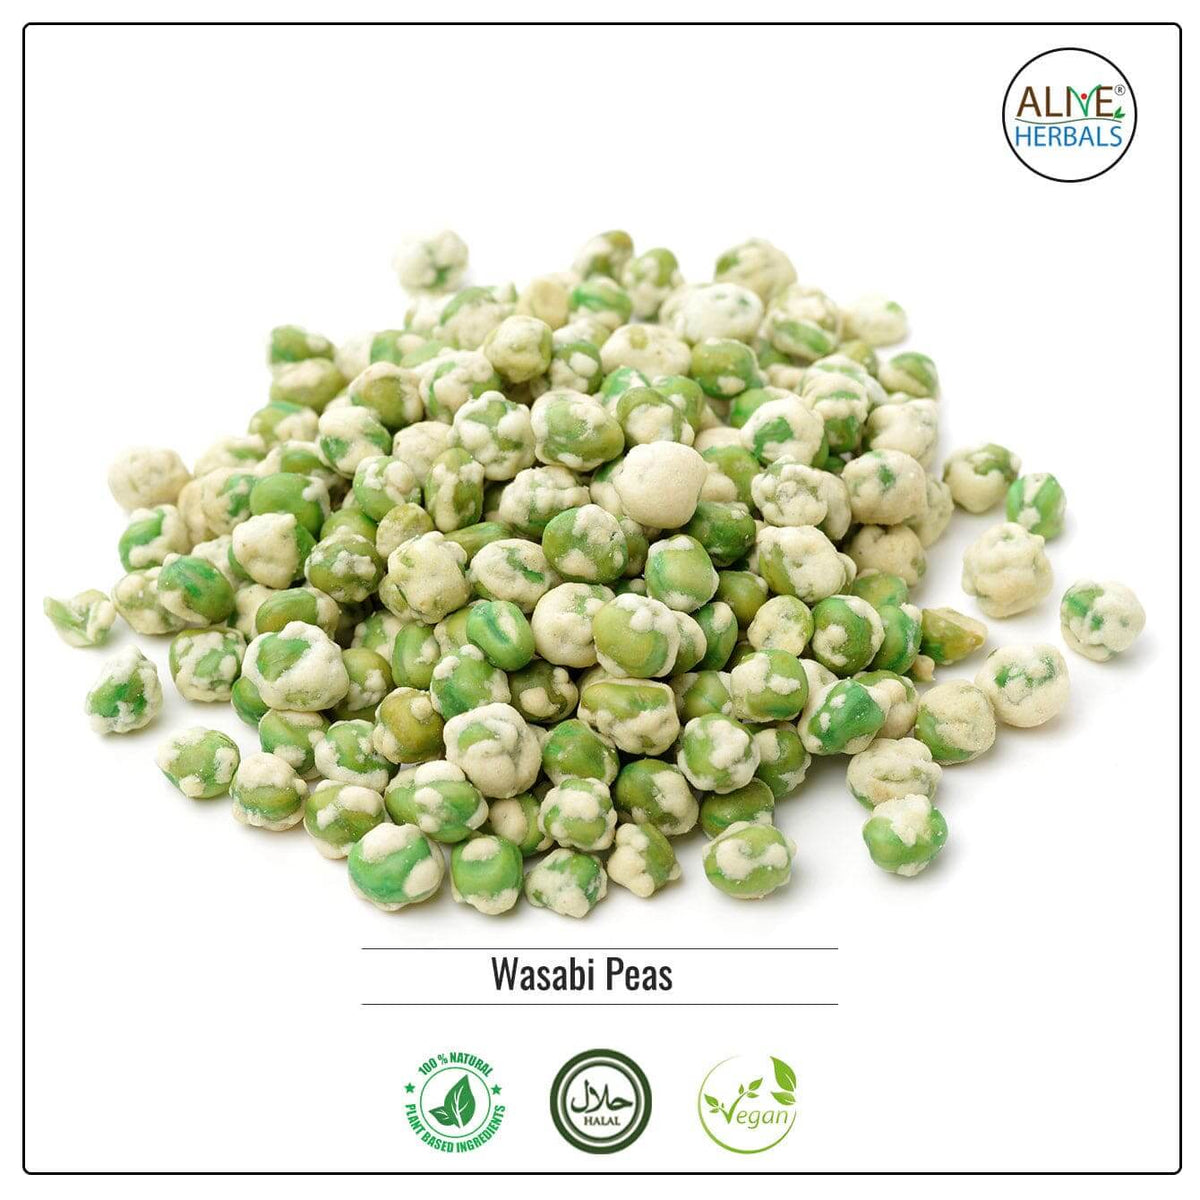 Wasabi green peas - Buy at Natural Food Store | Alive Herbals.